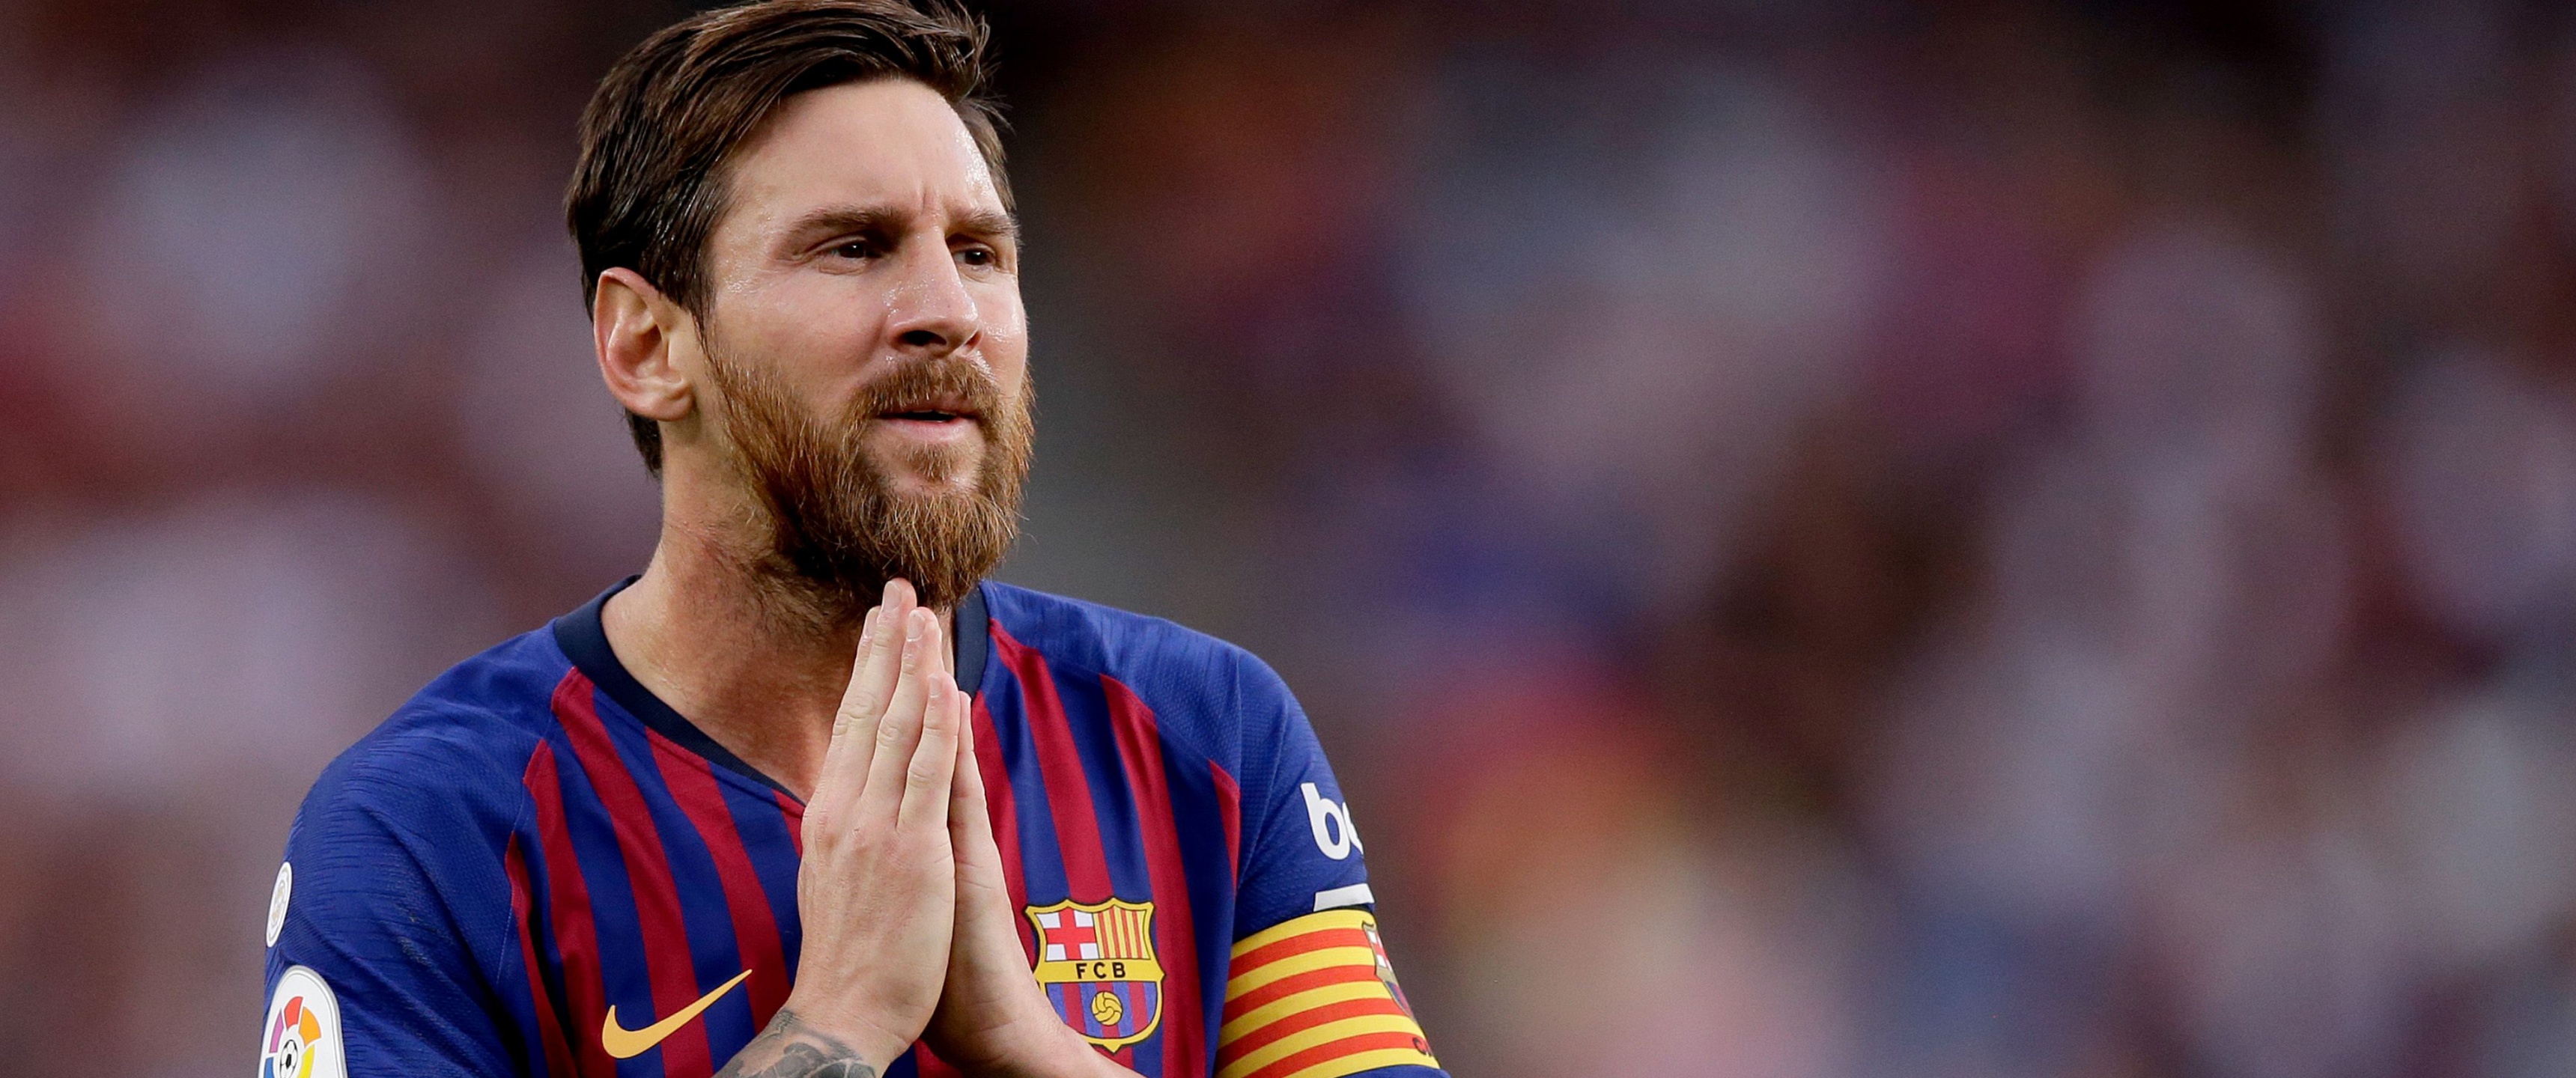 Lionel Messi Wallpaper 4K, Football player, Sports, #3275